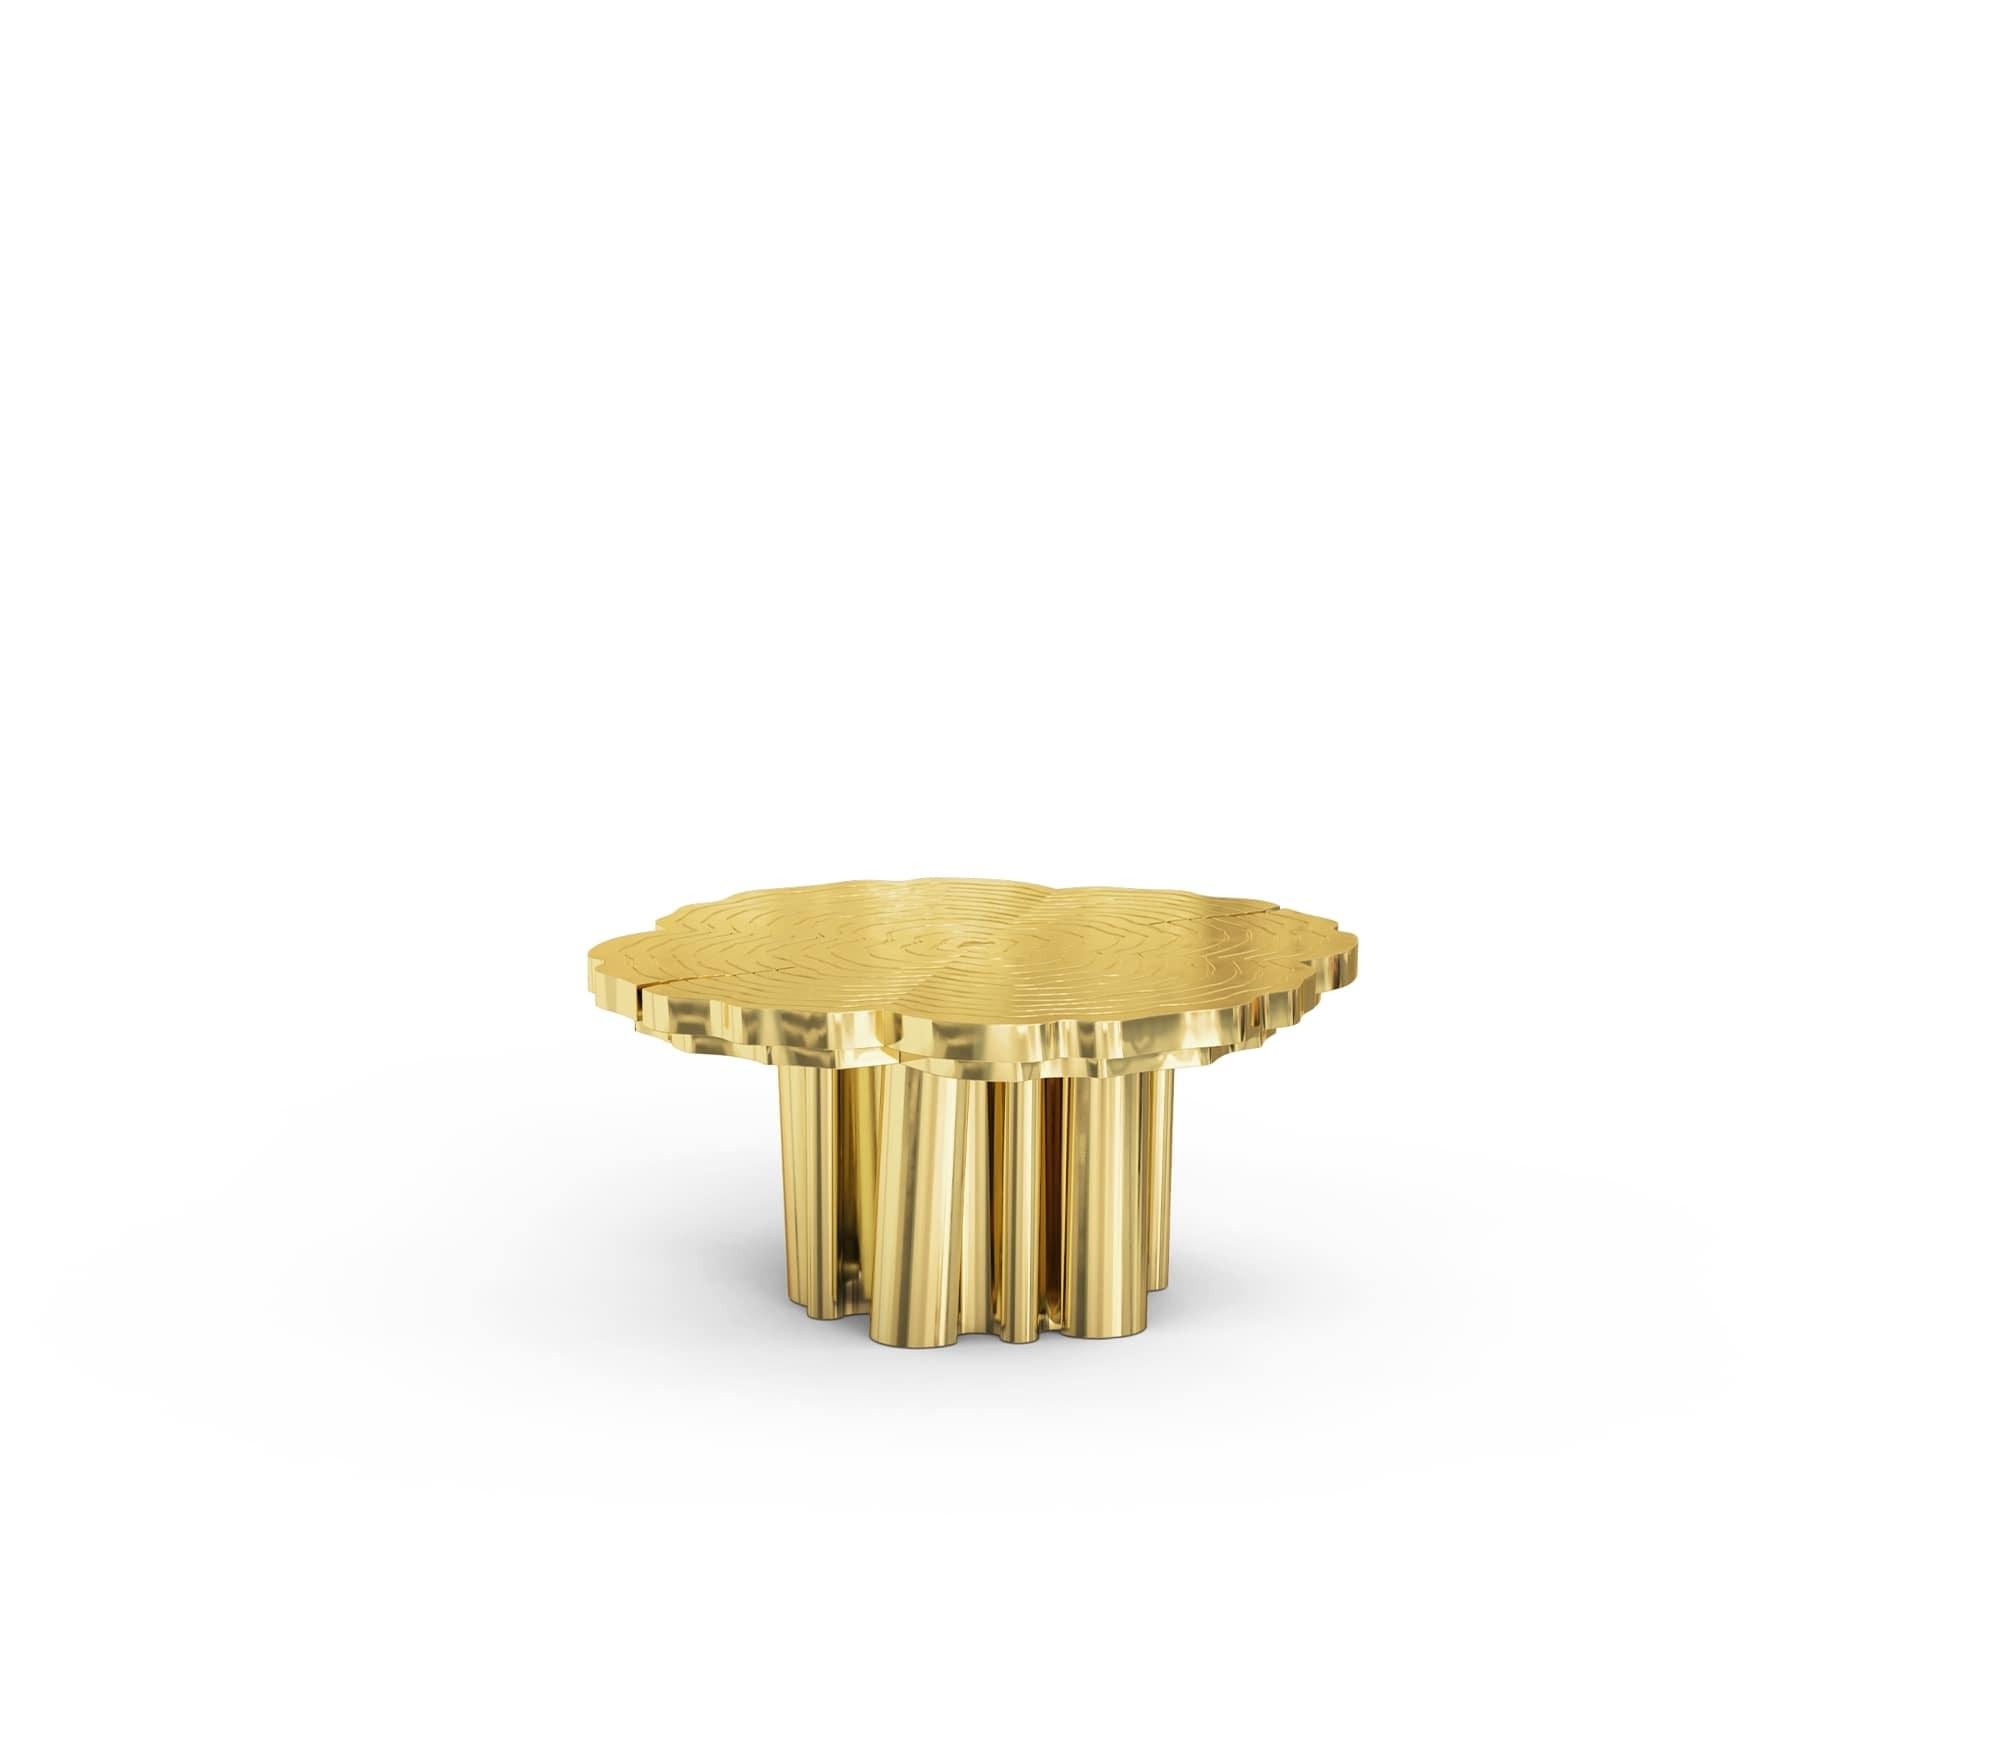 Portuguese Contemporary Fortuna Center Table in Brass by Boca do Lobo For Sale